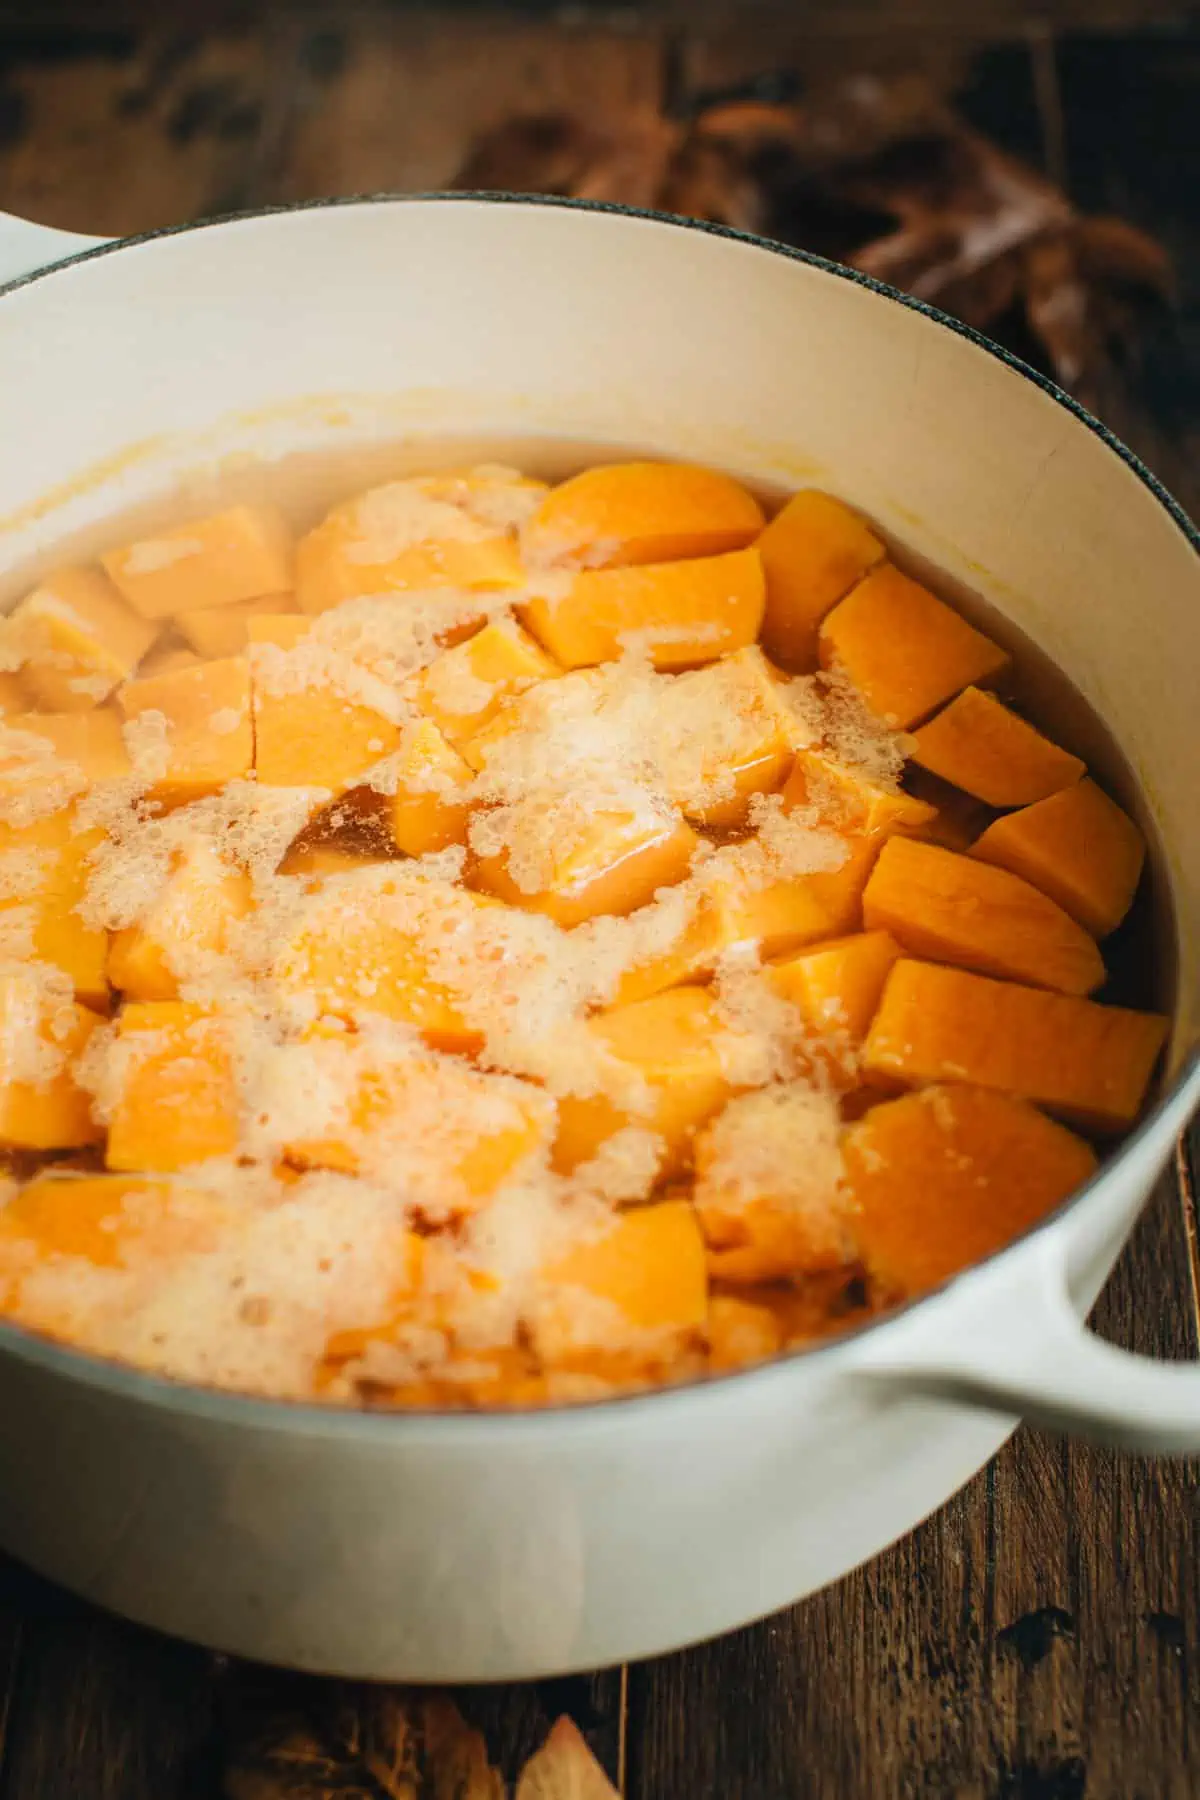 Boiling chopped sweet potatoes for making Healthy Sweet Potato Casserole.